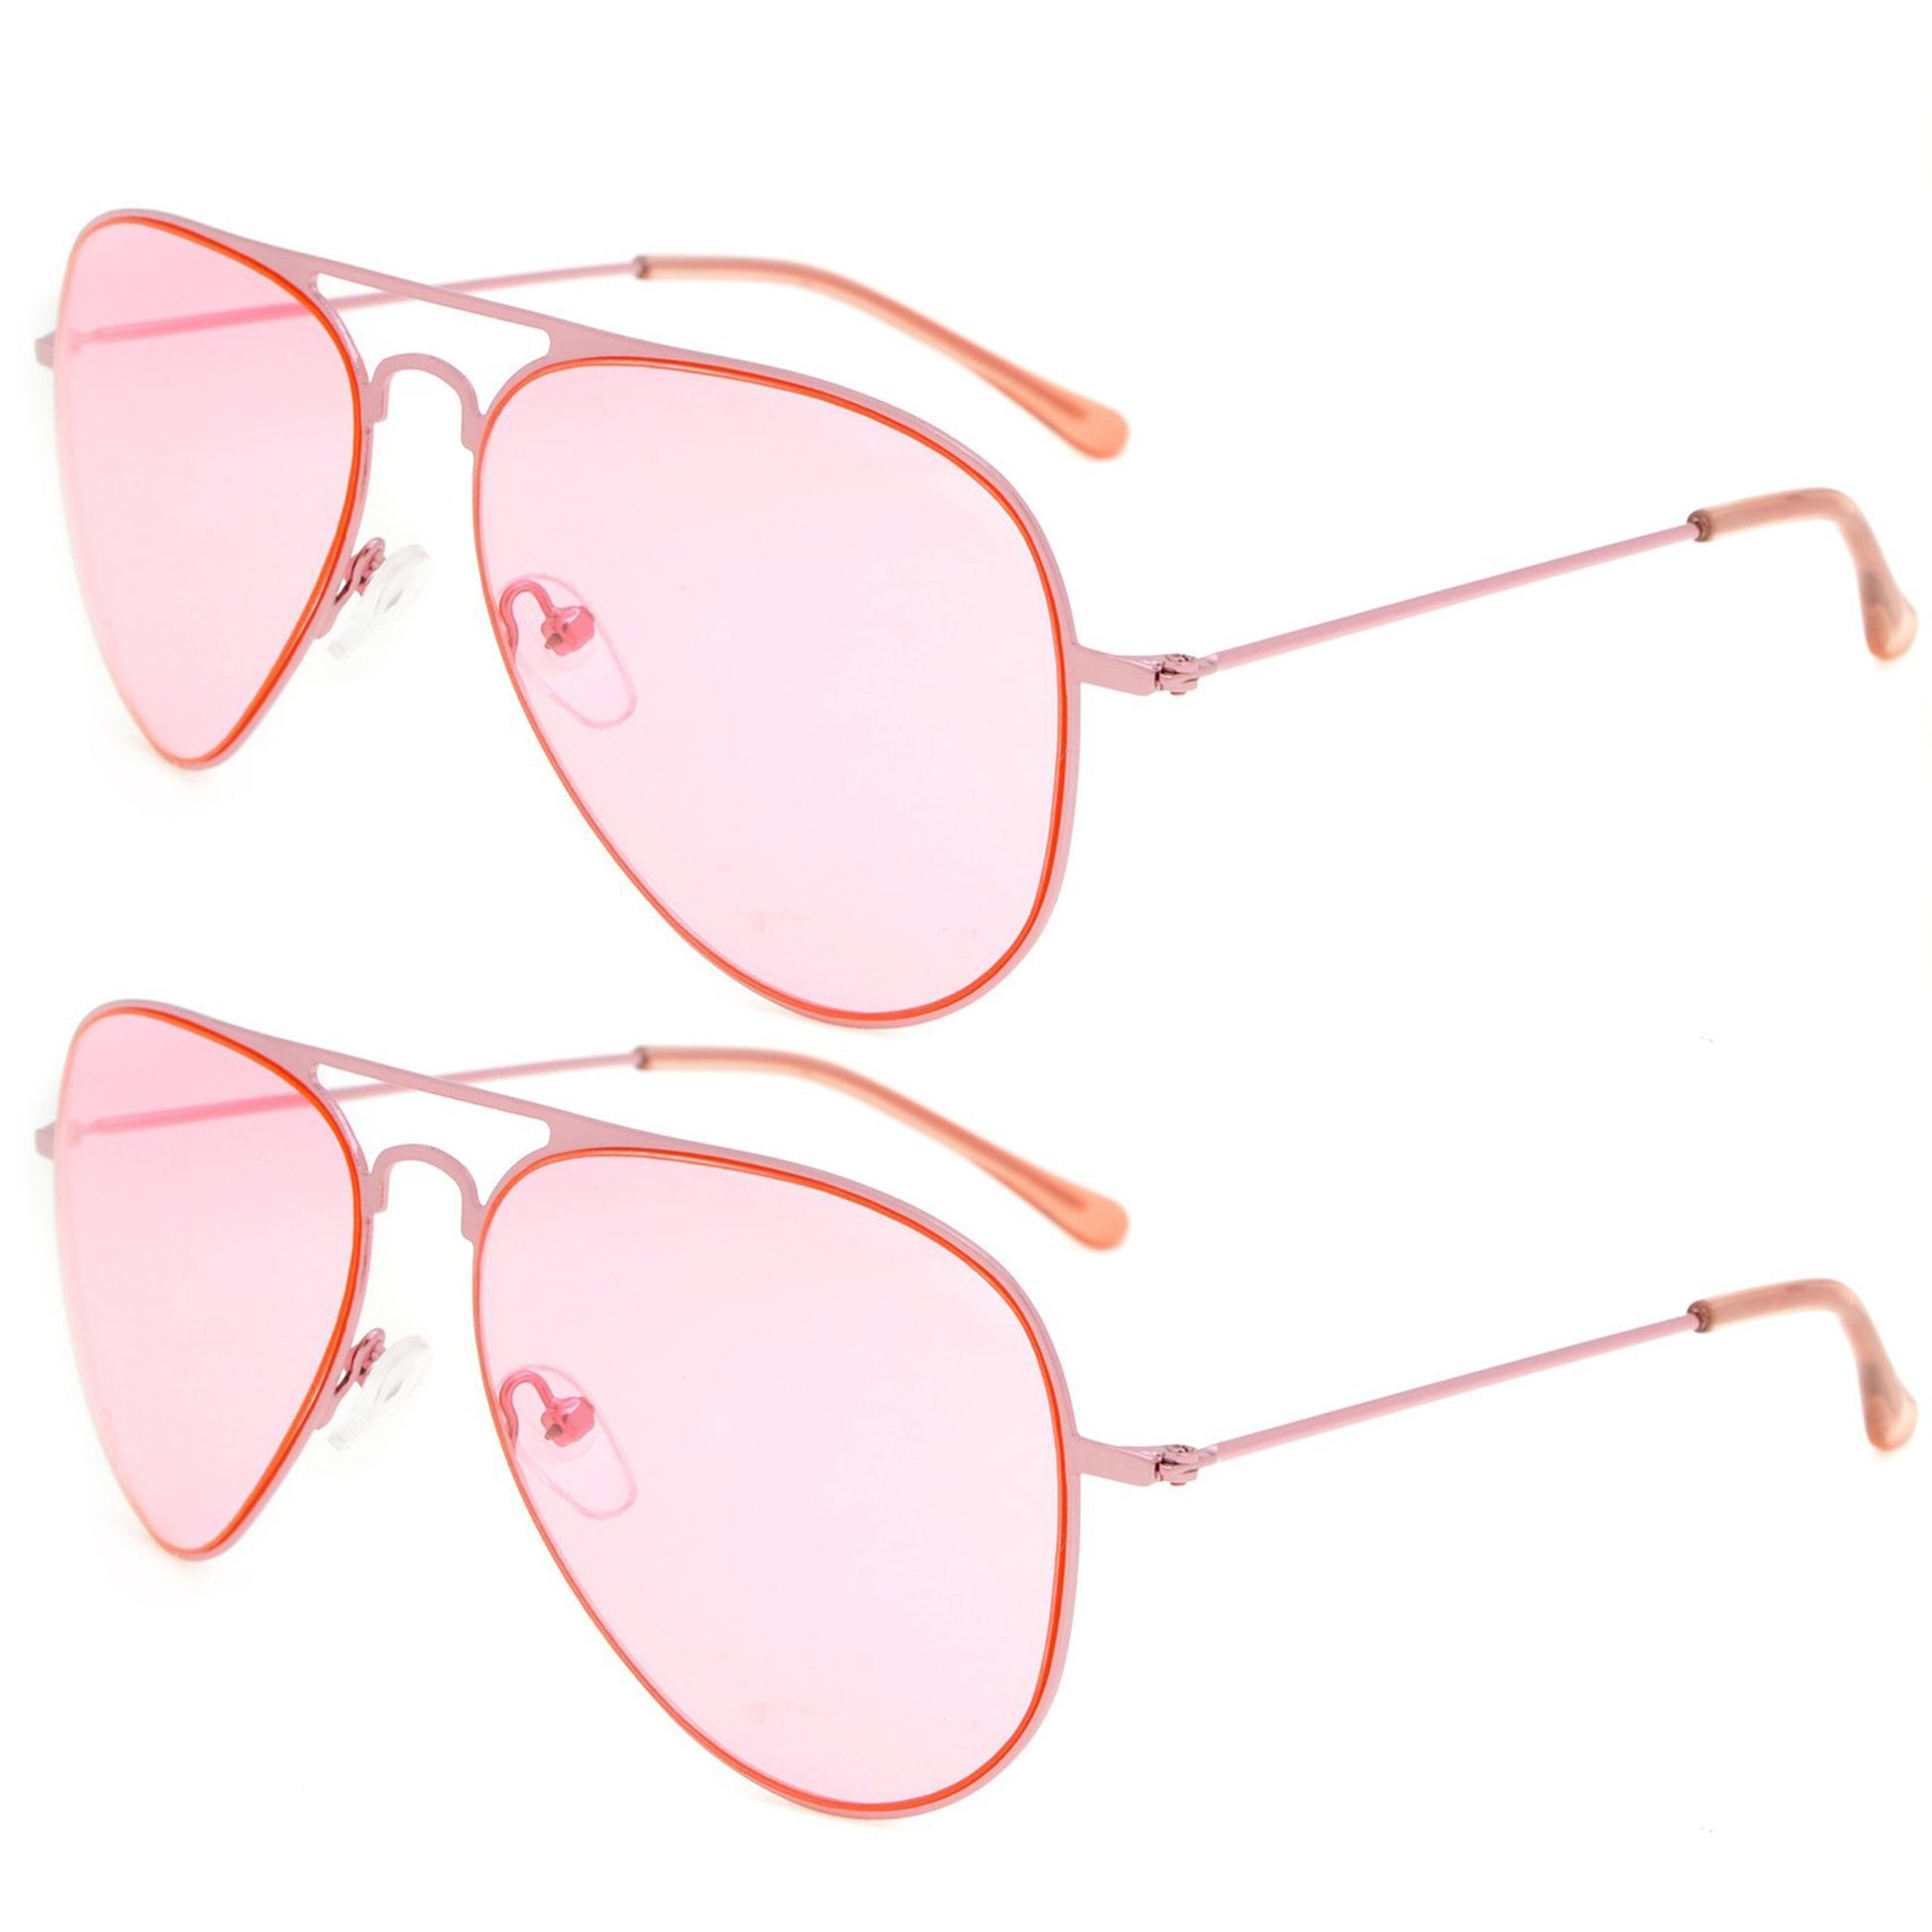 Stylish Sunglasses for Boys Girls Pink Lens S15018